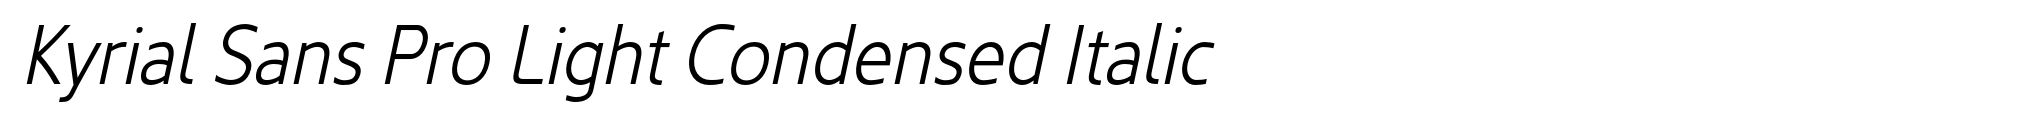 Kyrial Sans Pro Light Condensed Italic image